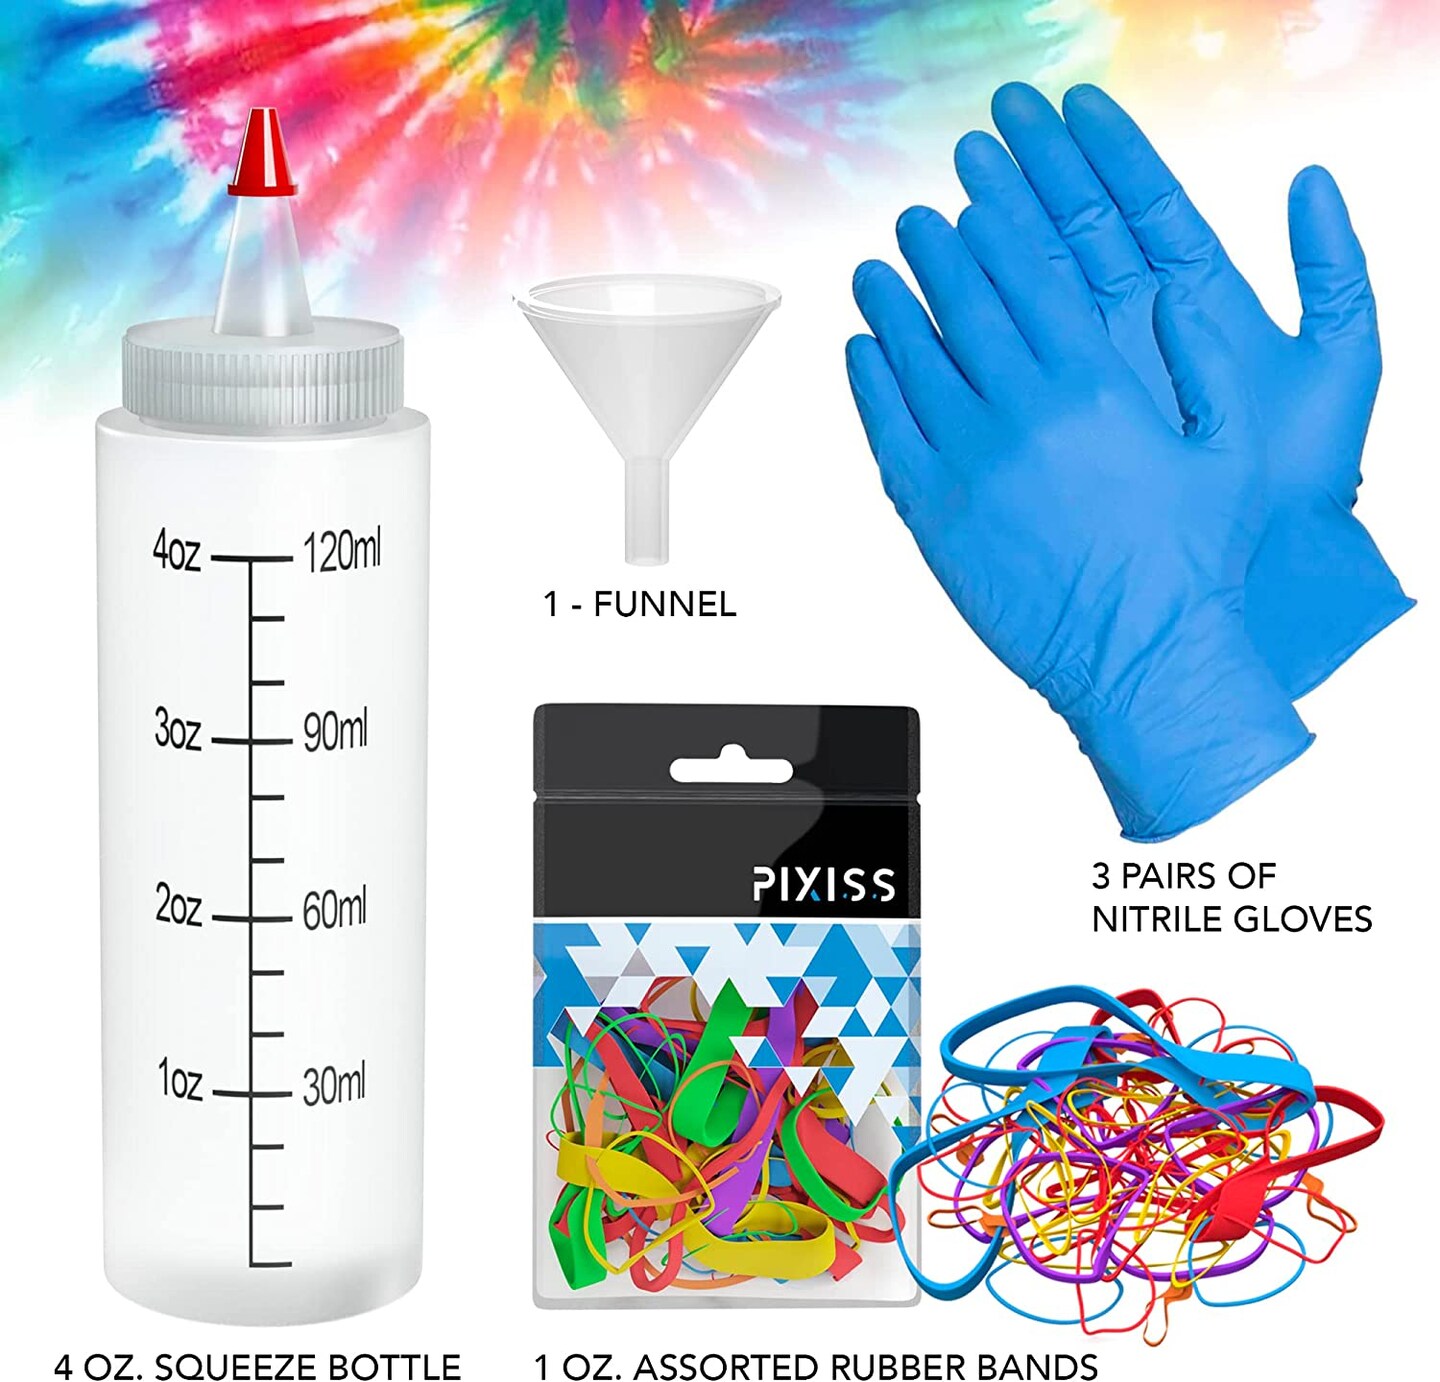 Rit DyeMore Midnight Navy Synthetic Fiber Dye - Liquid Dye - Dye & Paint -  Notions